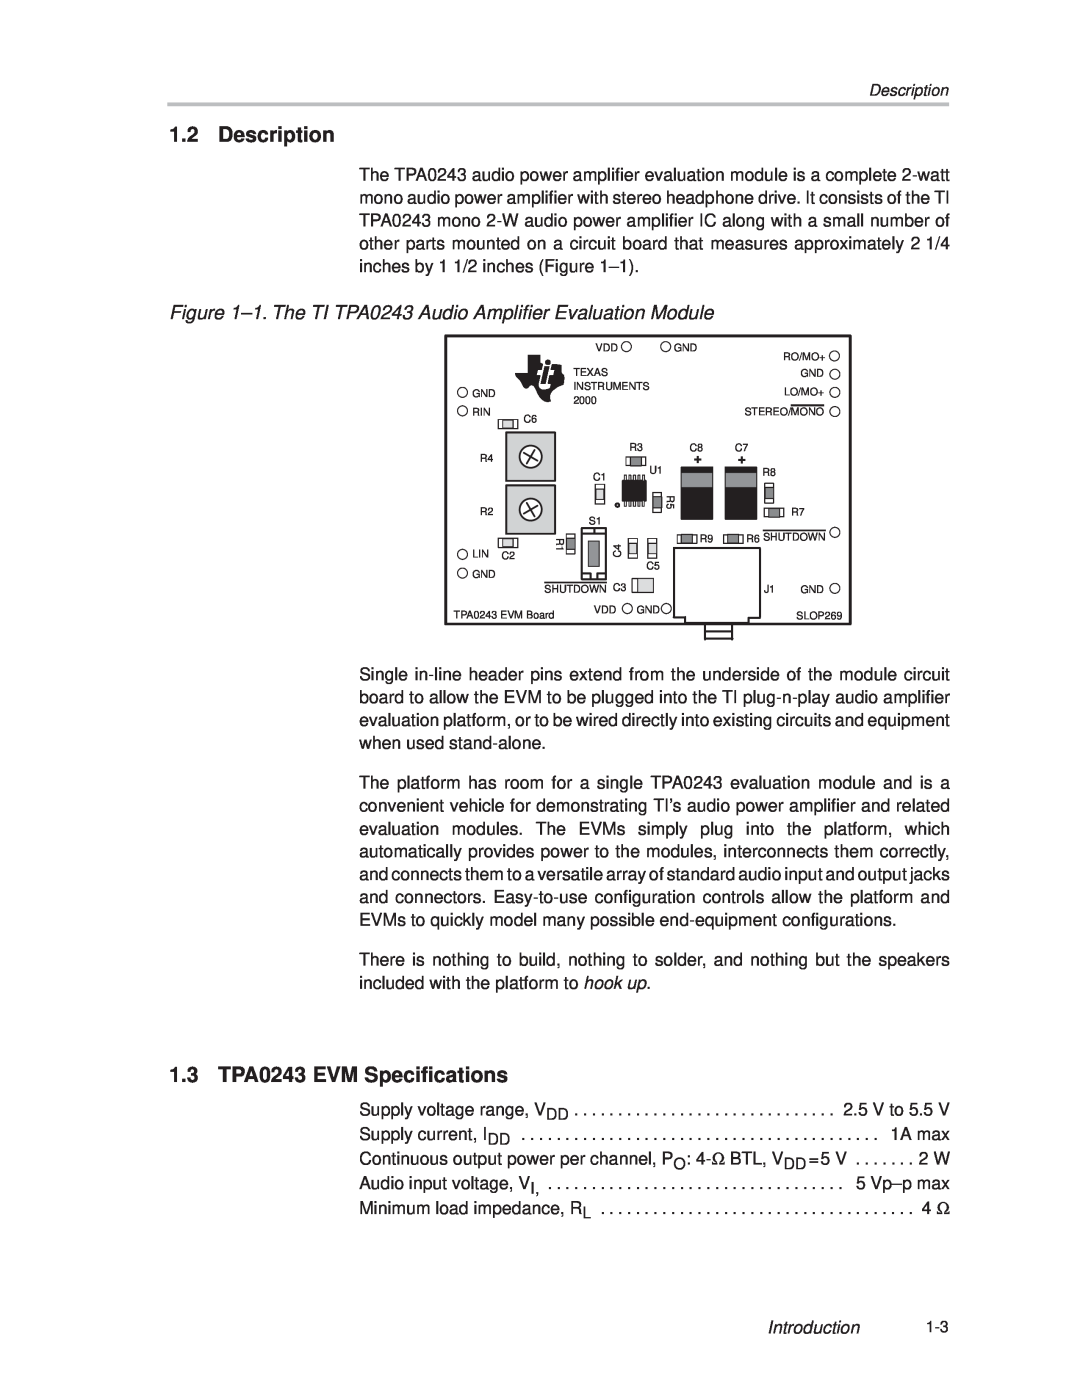 Texas Instruments manual Description, 1.3 TPA0243 EVM Specifications, Introduction 